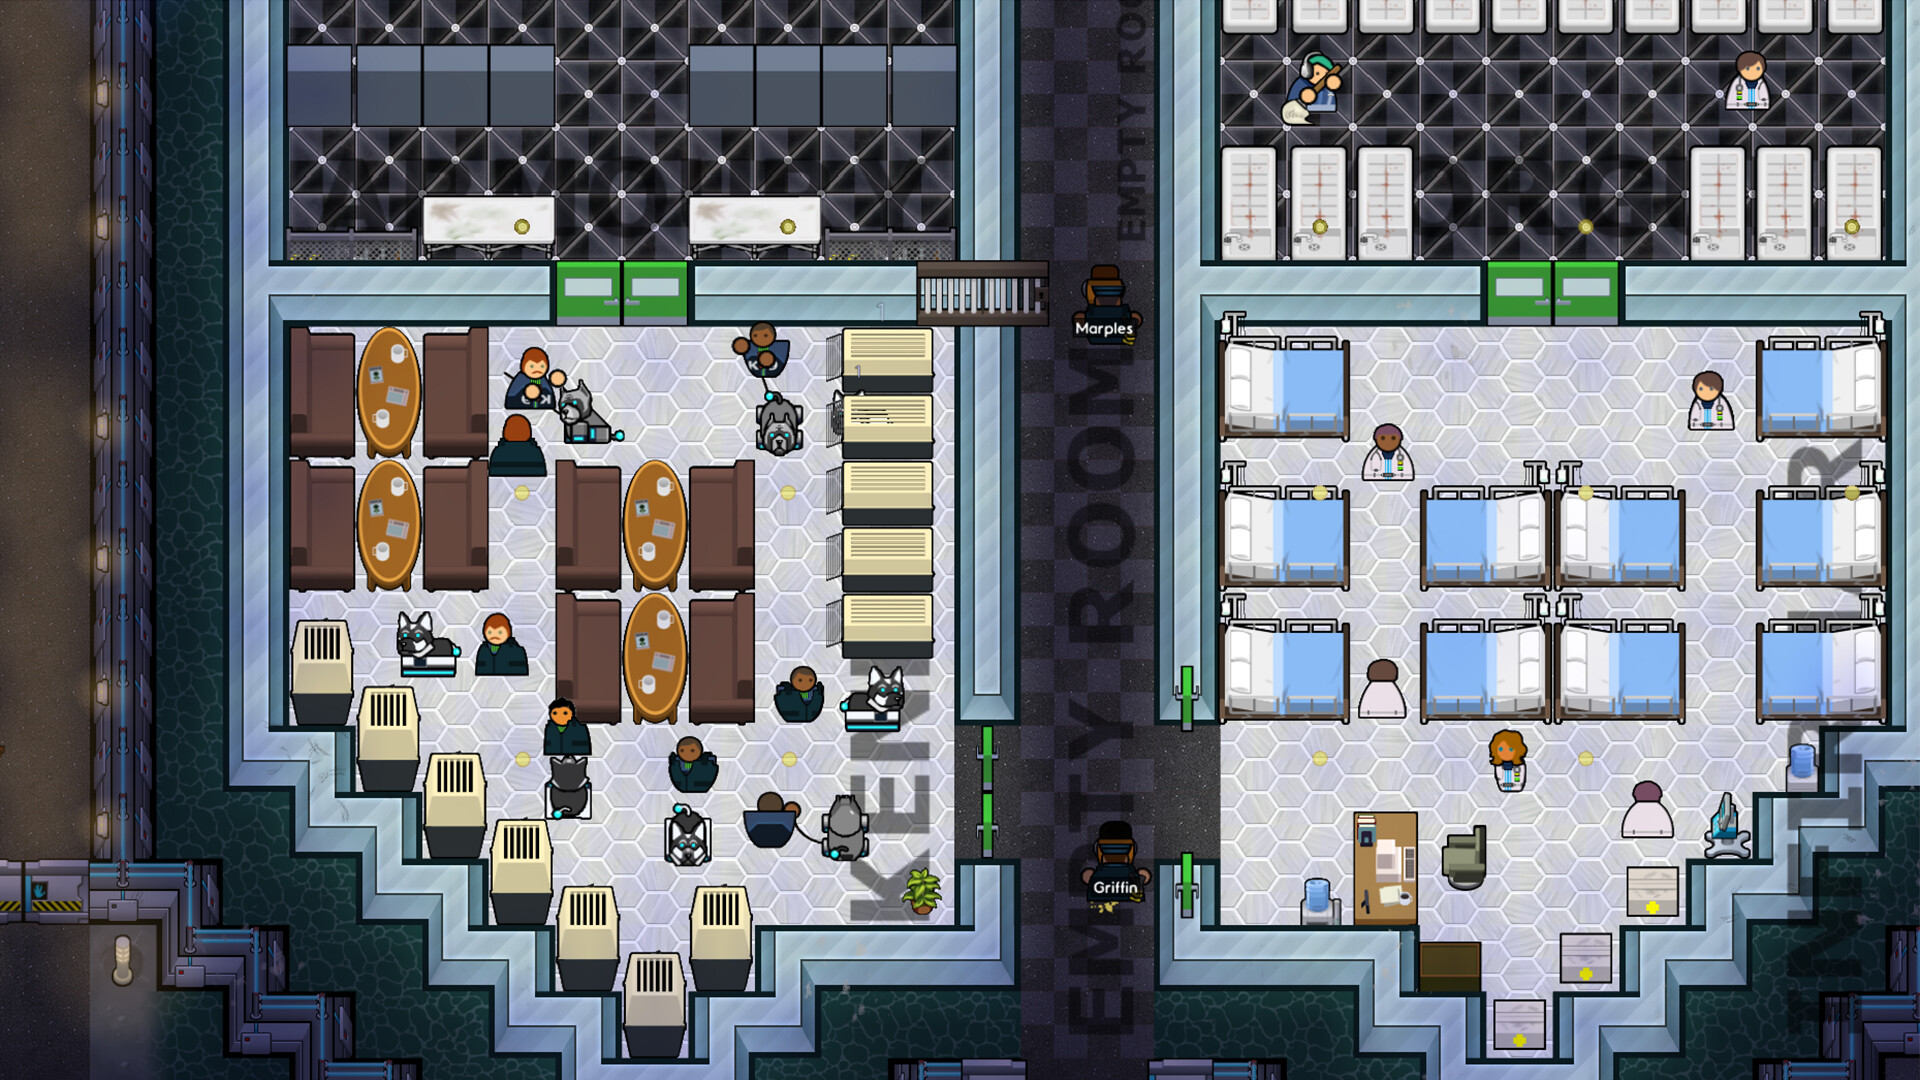 Prison Architect - Future Tech Pack DLC Steam CD Key